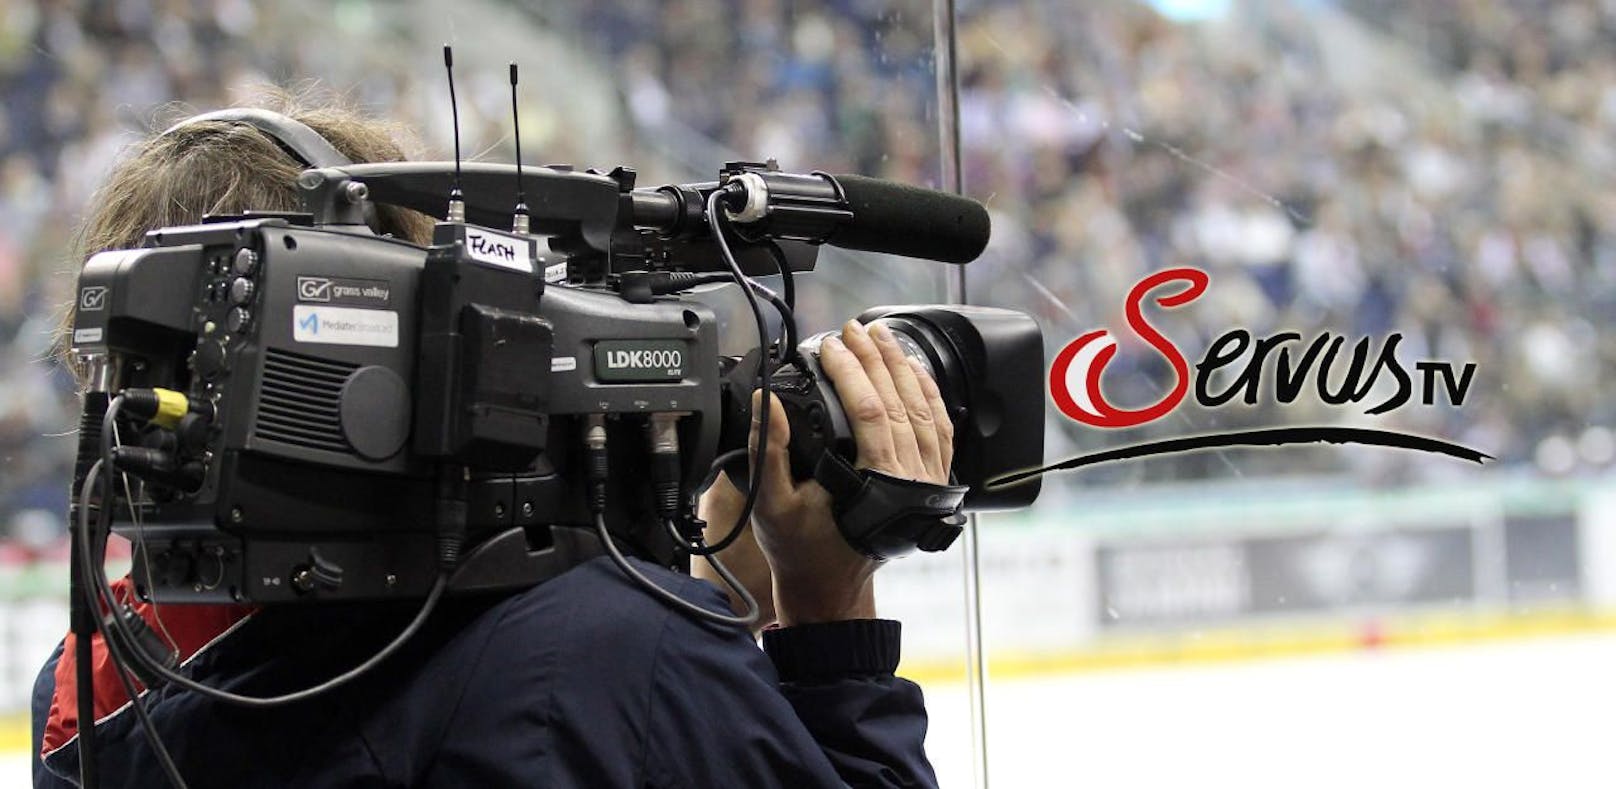 ServusTV überträgt Eishockey vermehrt im Internet